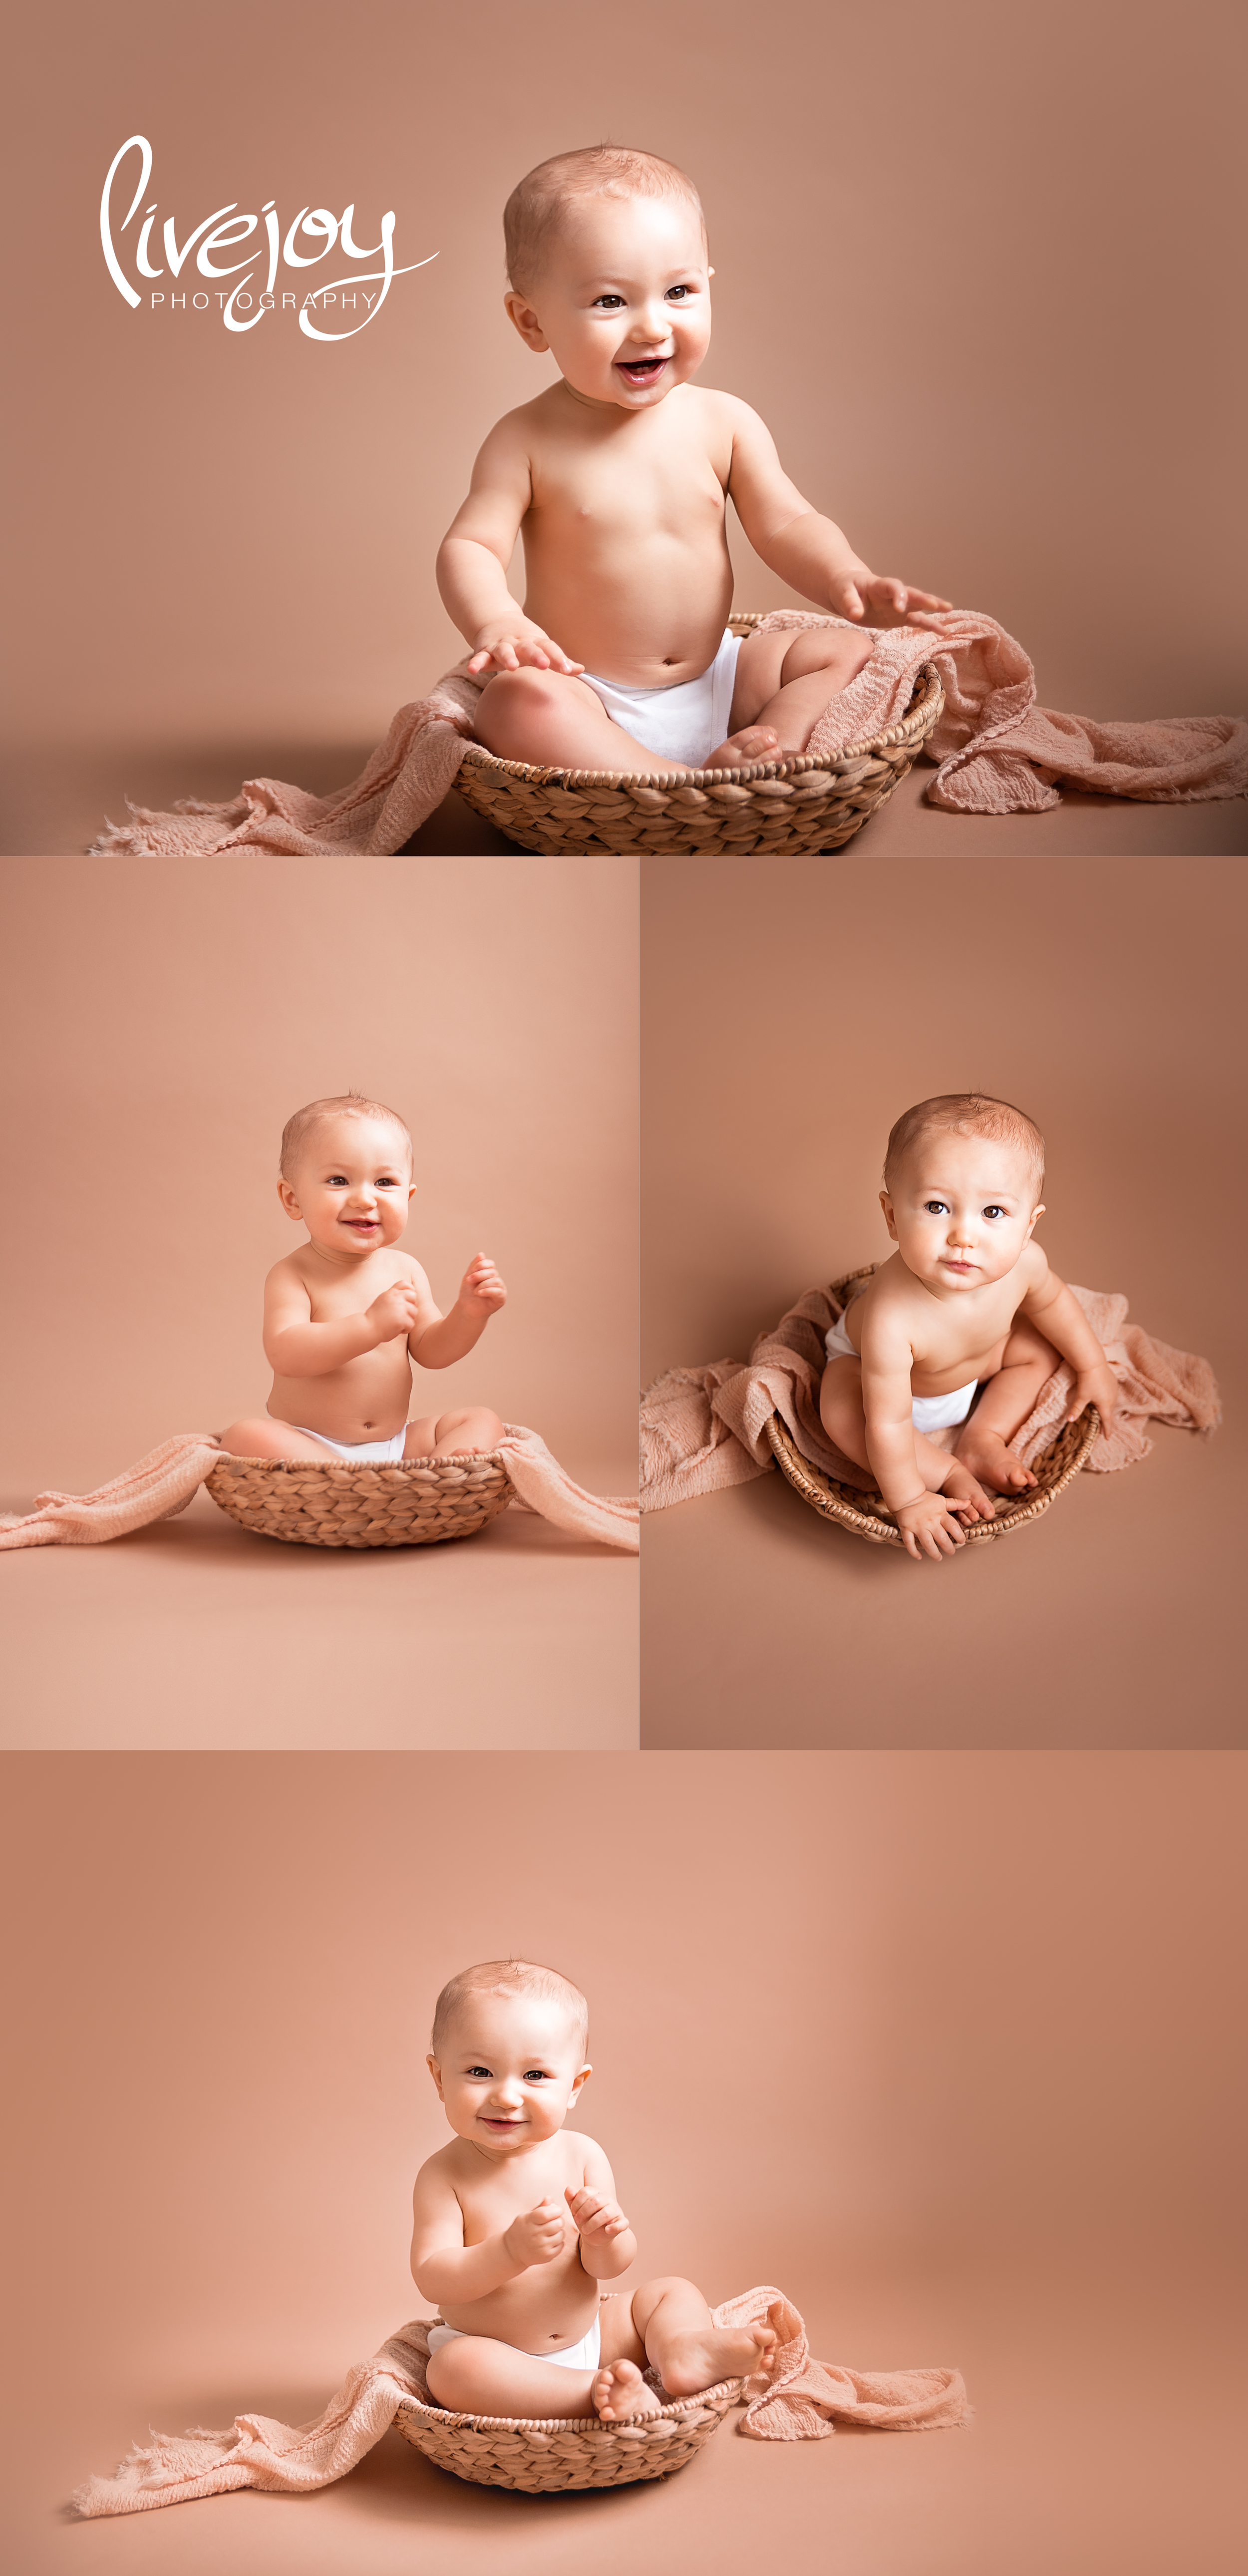 9 Months Studio Baby Photos | Oregon | LiveJoy Photography